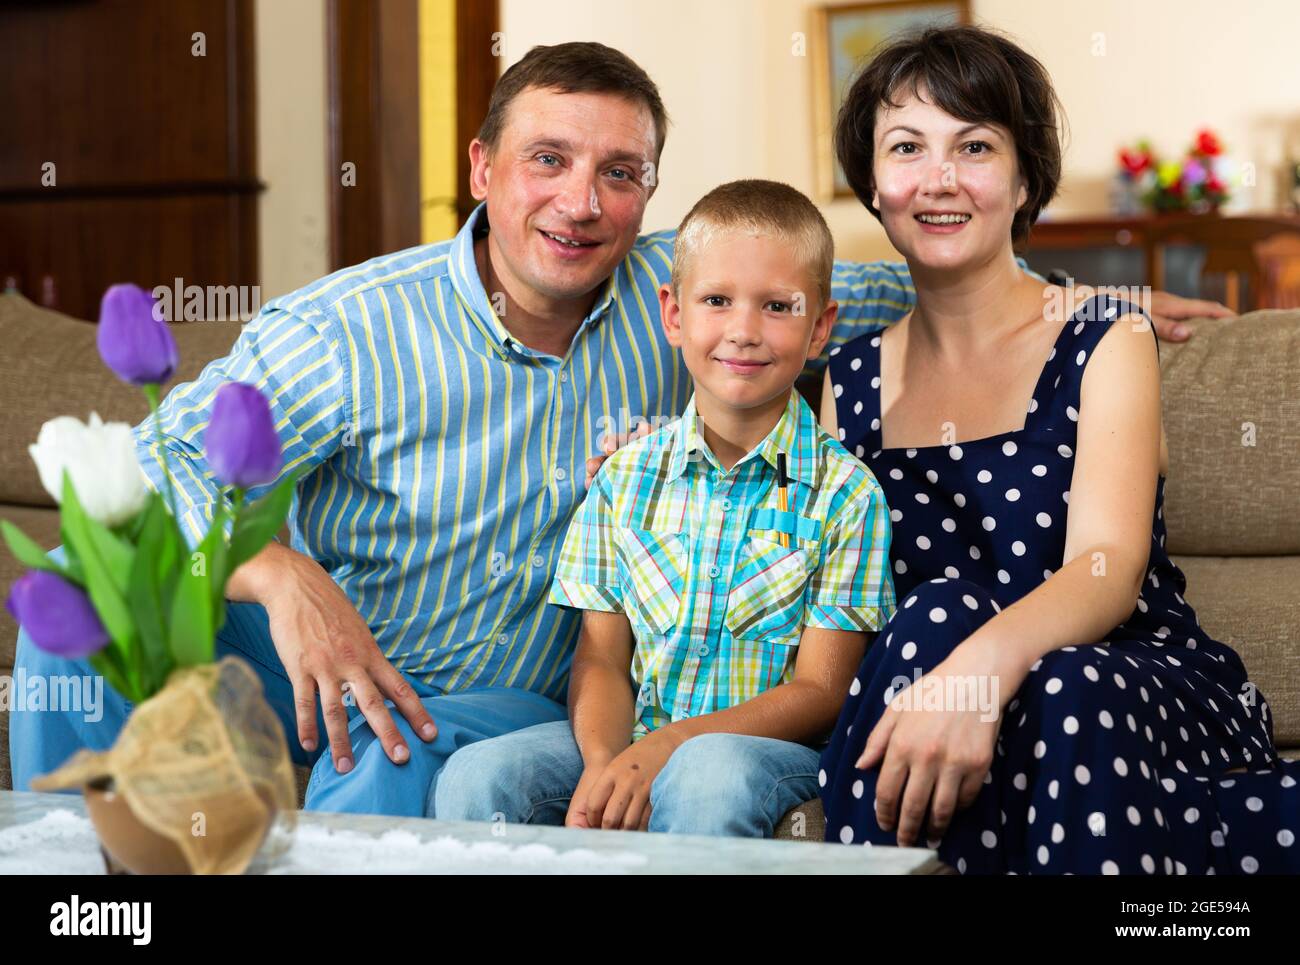 Portrait of smiling family in domestic interior Stock Photo